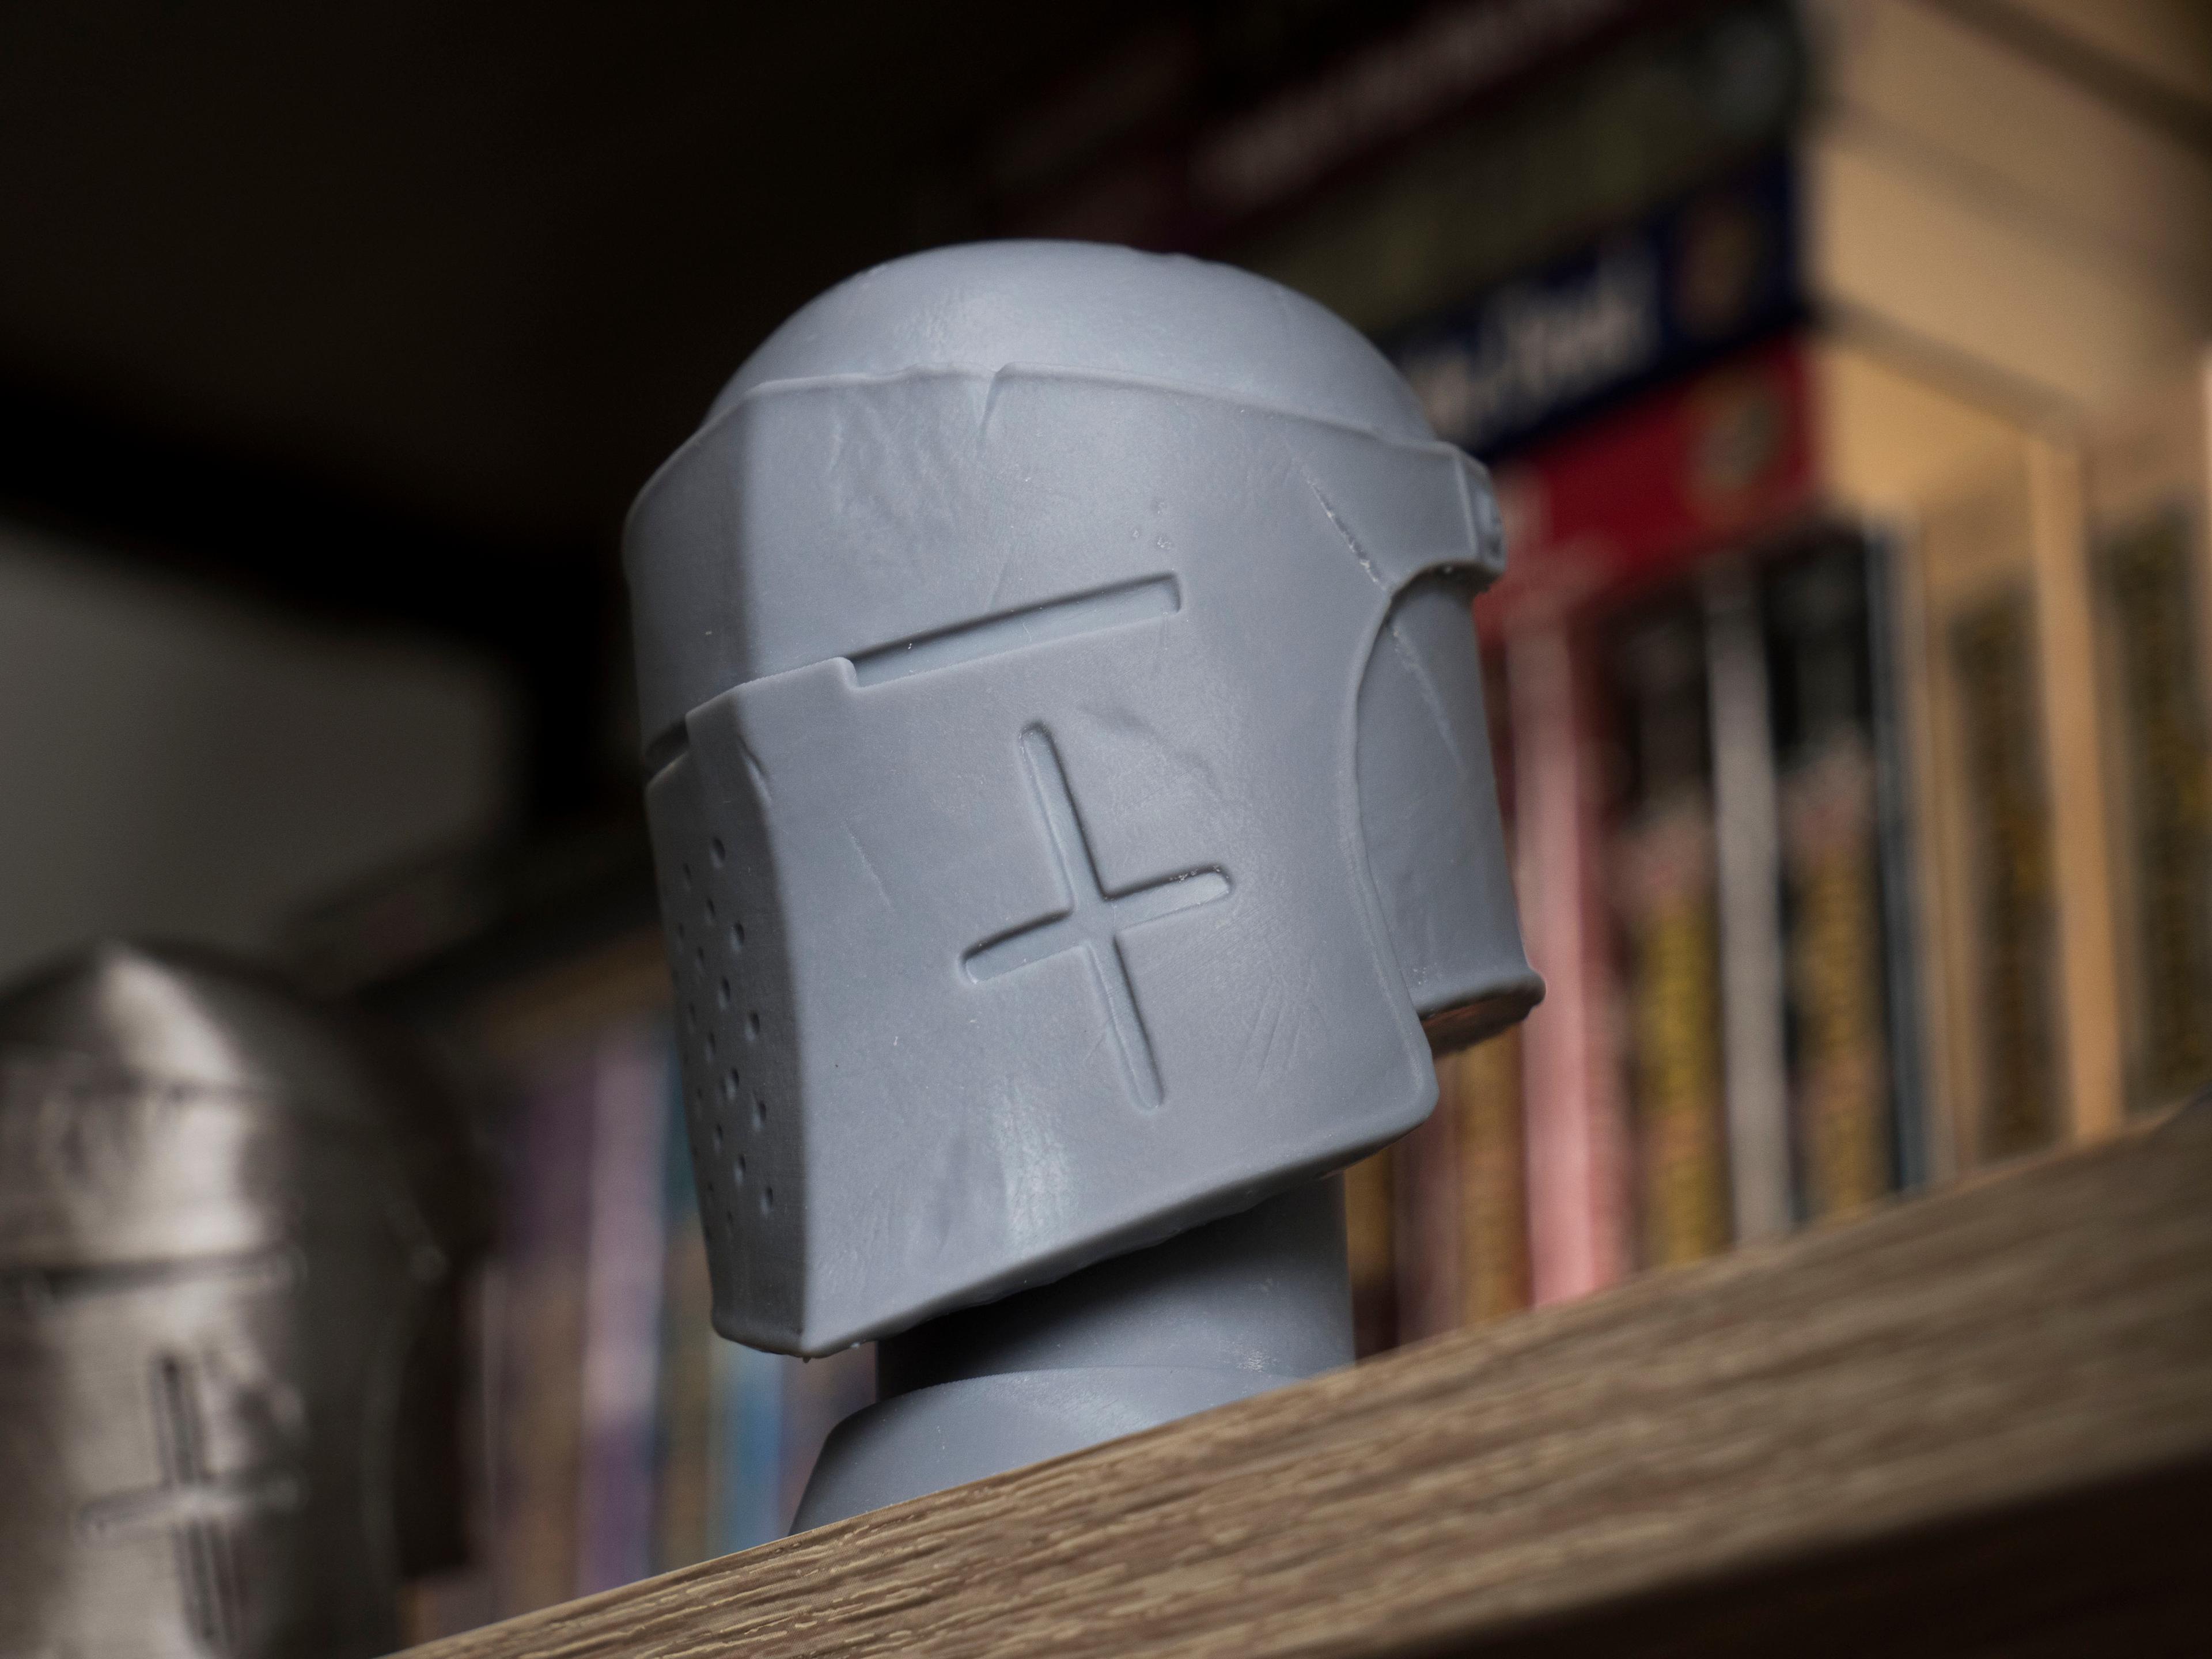 Templar Helmet 3d model